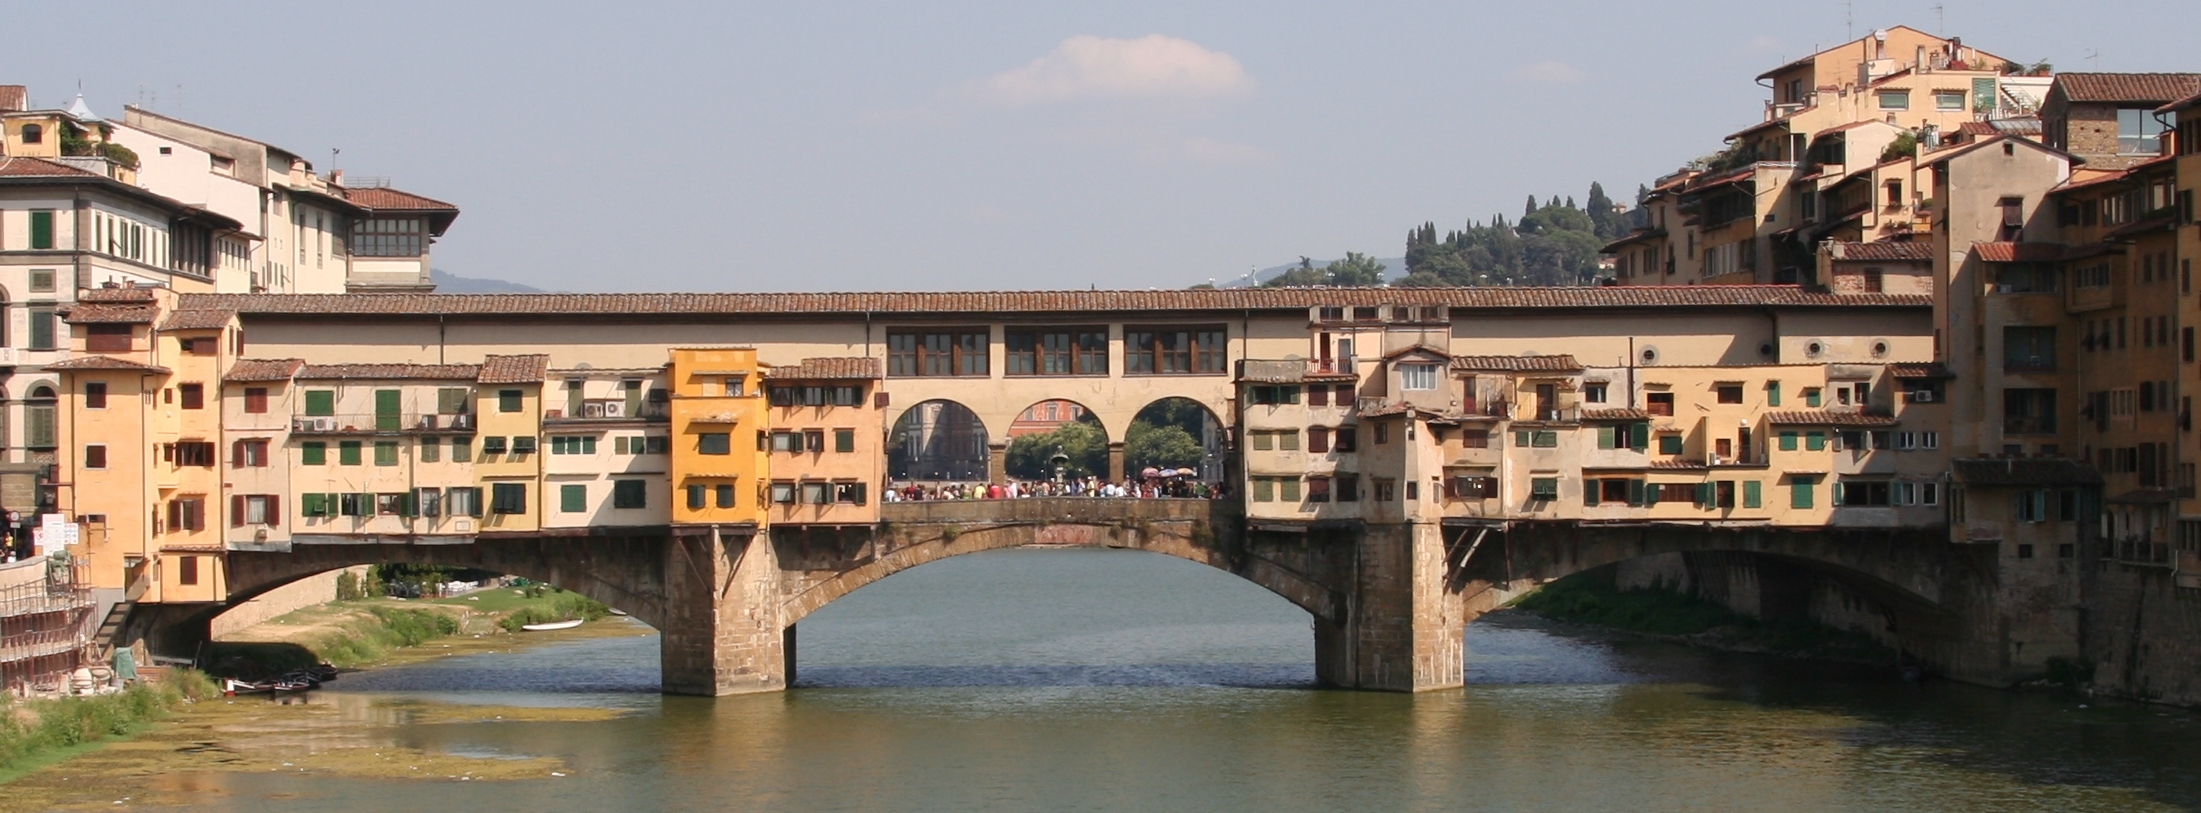 Ponte Vecchio #3